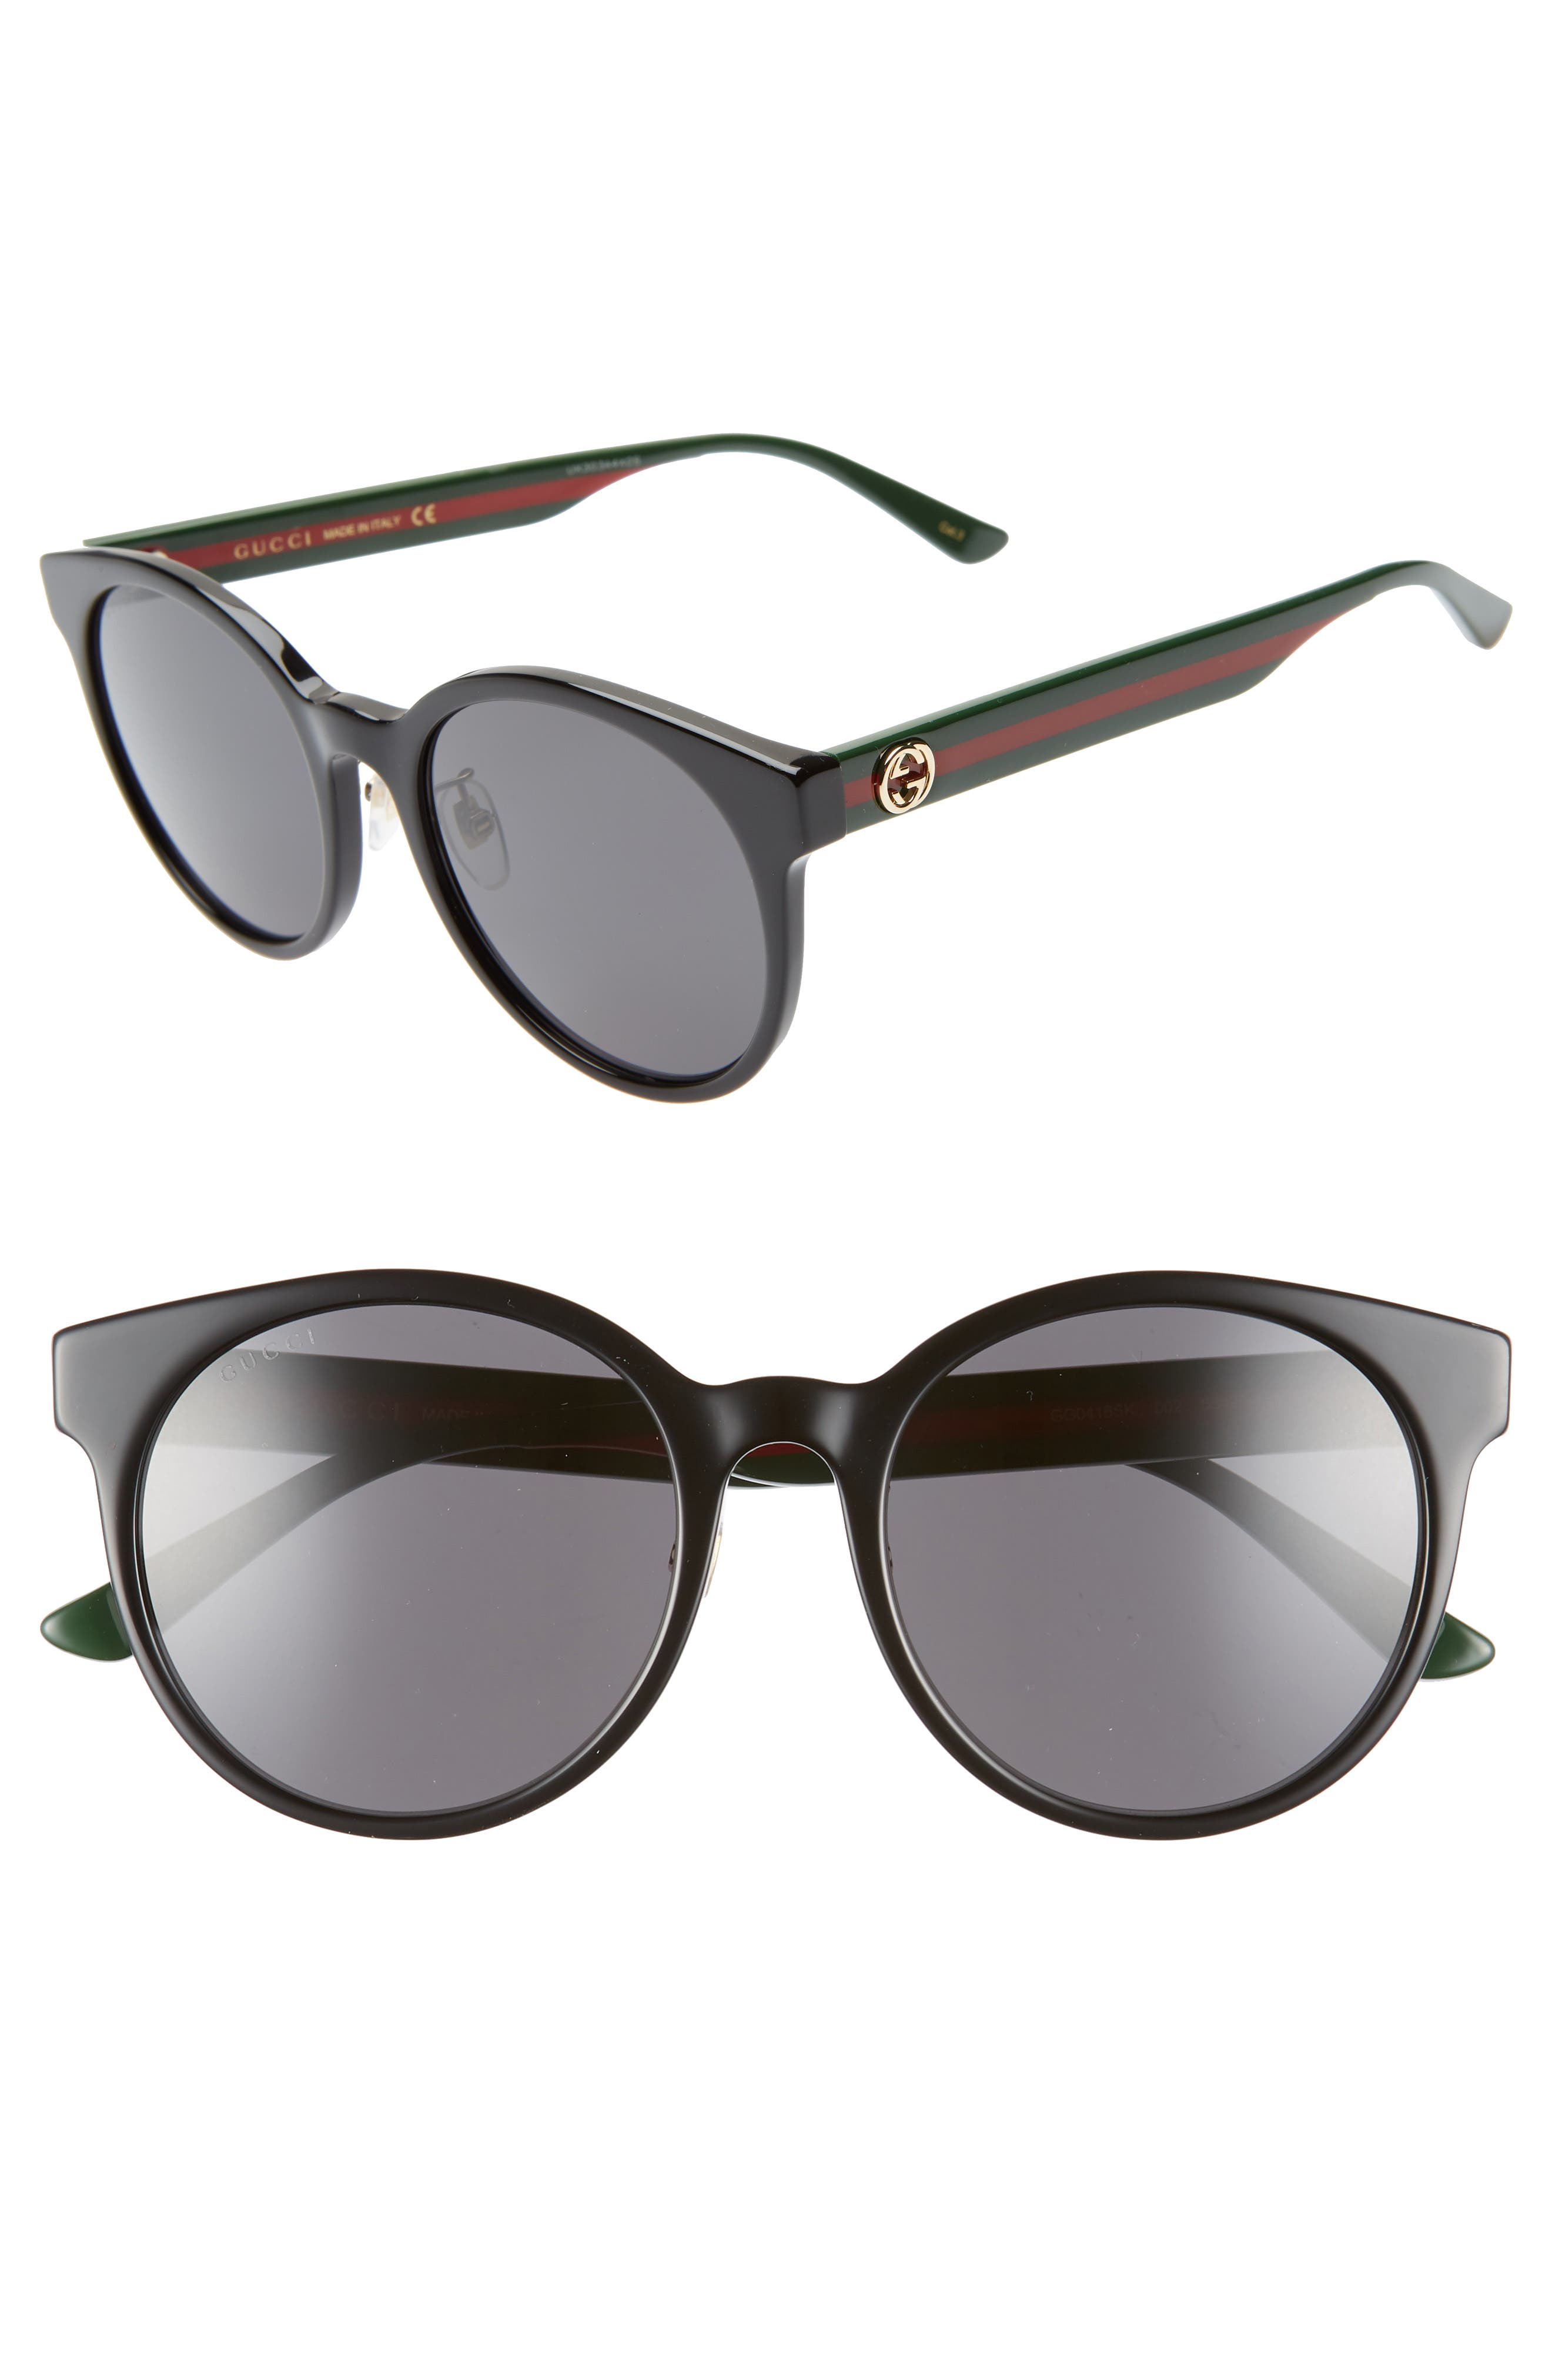 gucci 55mm sunglasses